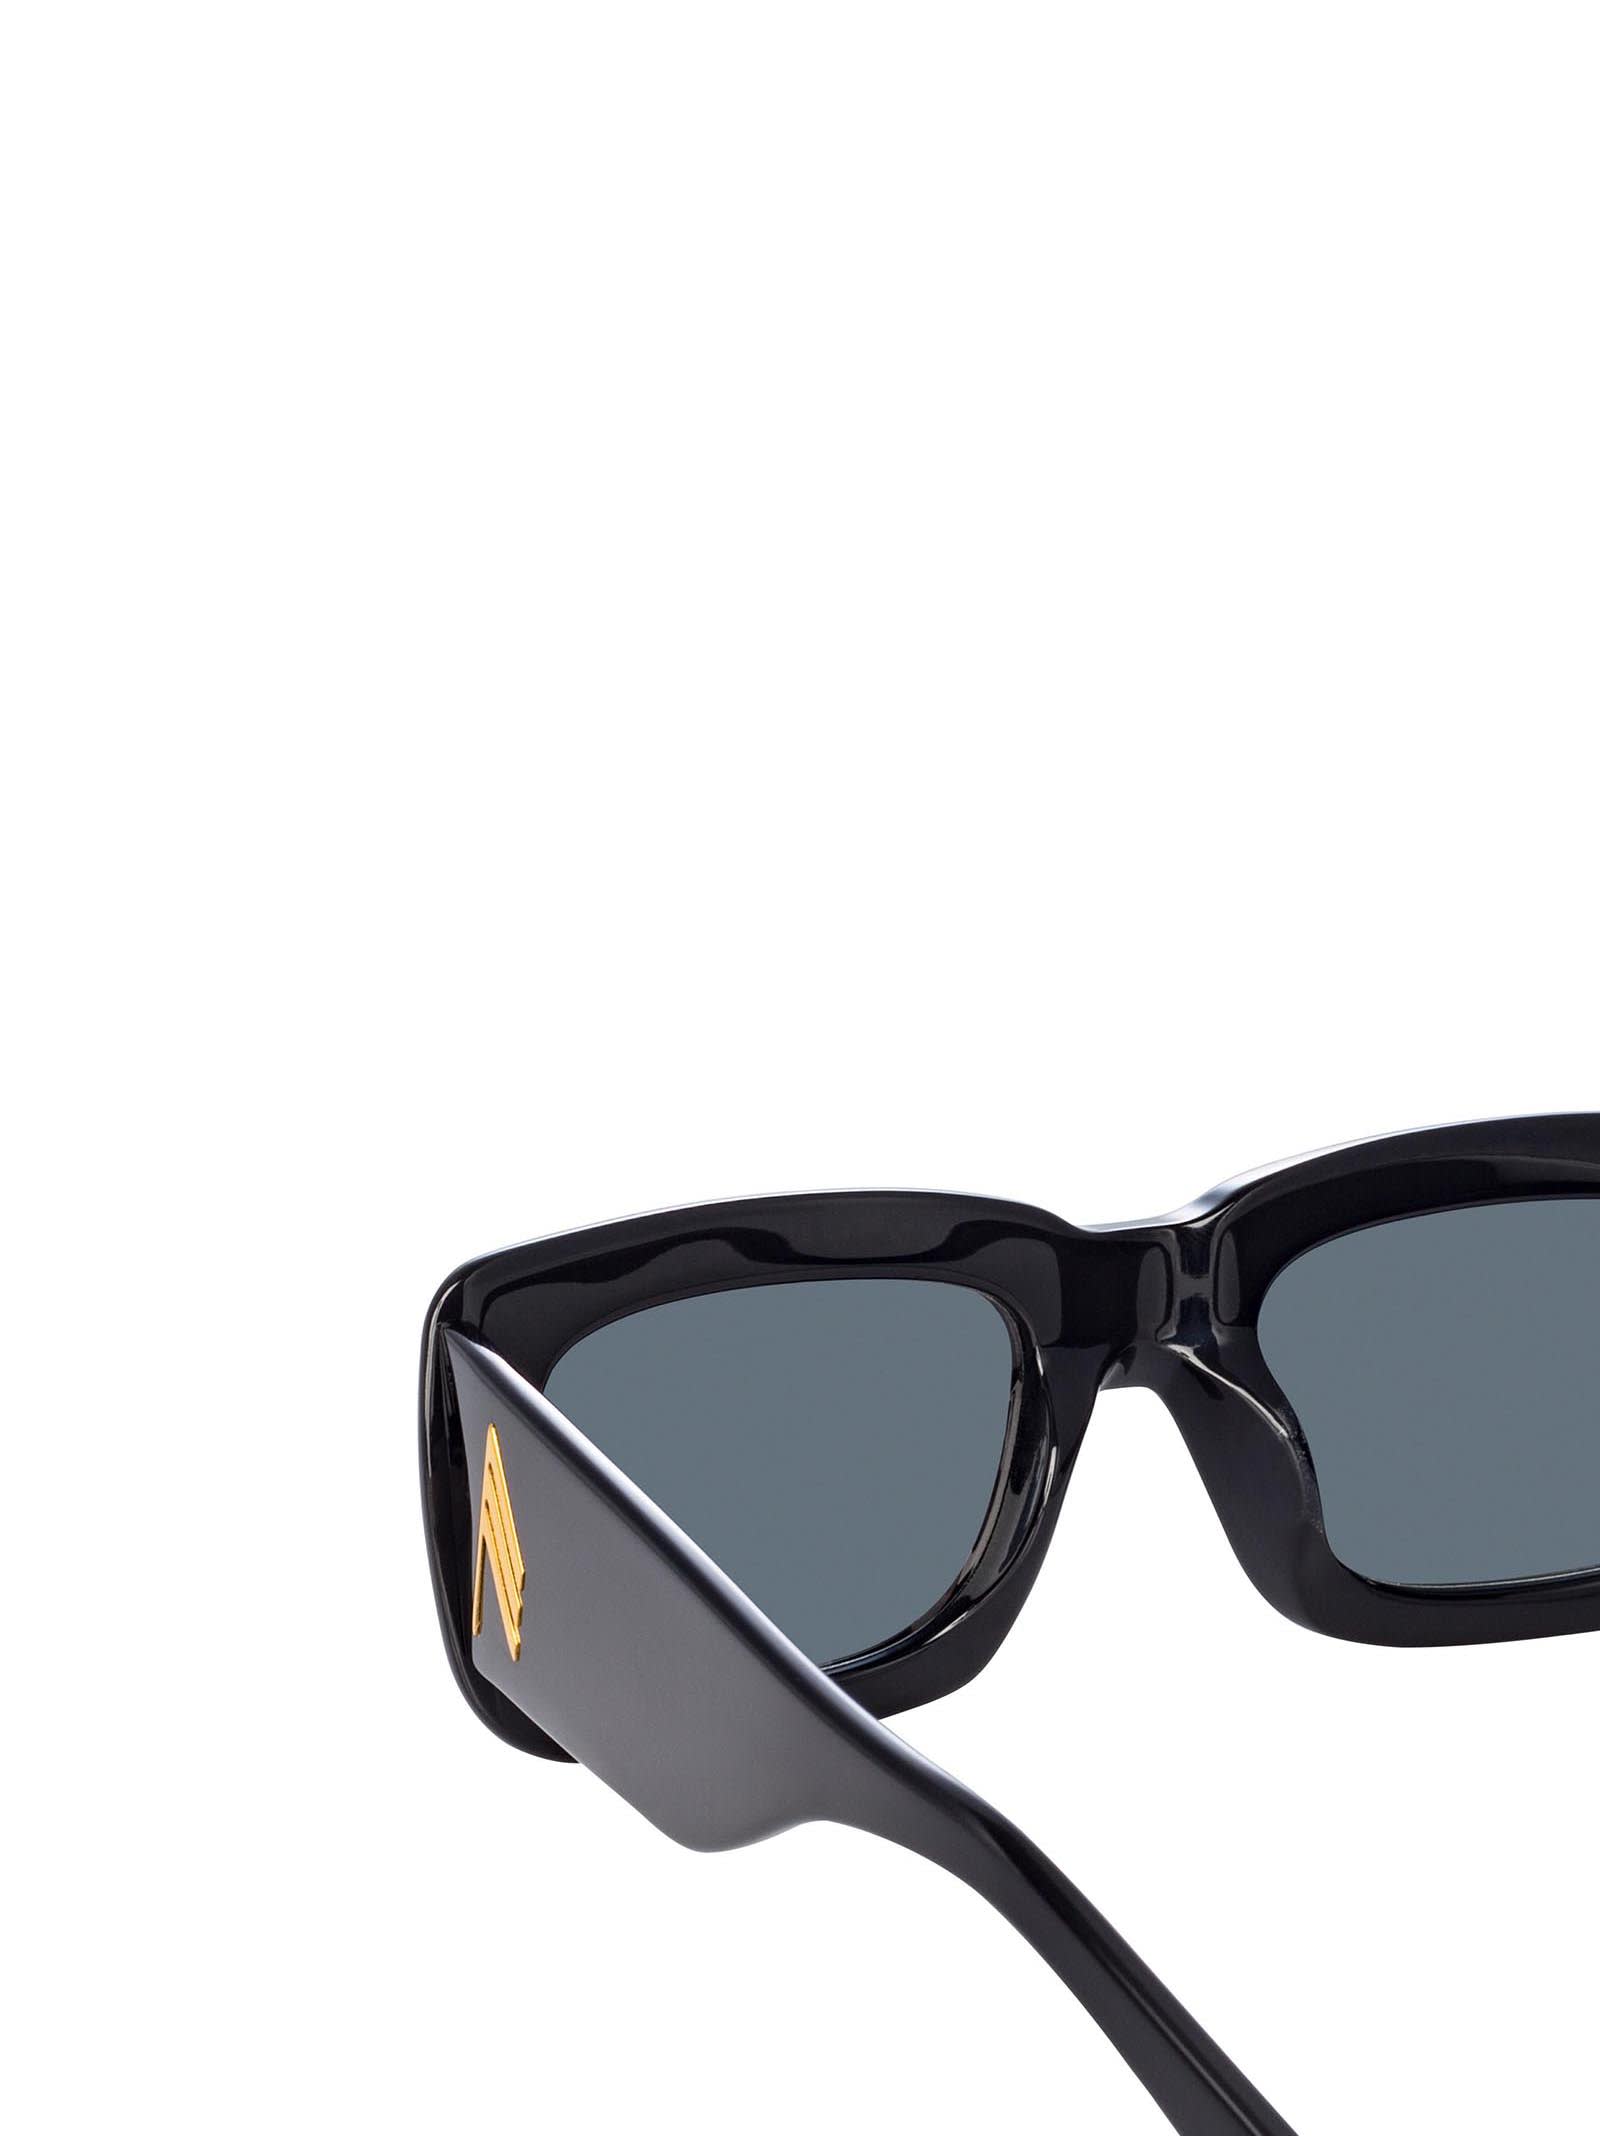 Shop Linda Farrow Attico3 Black / Yellow Gold Sunglasses